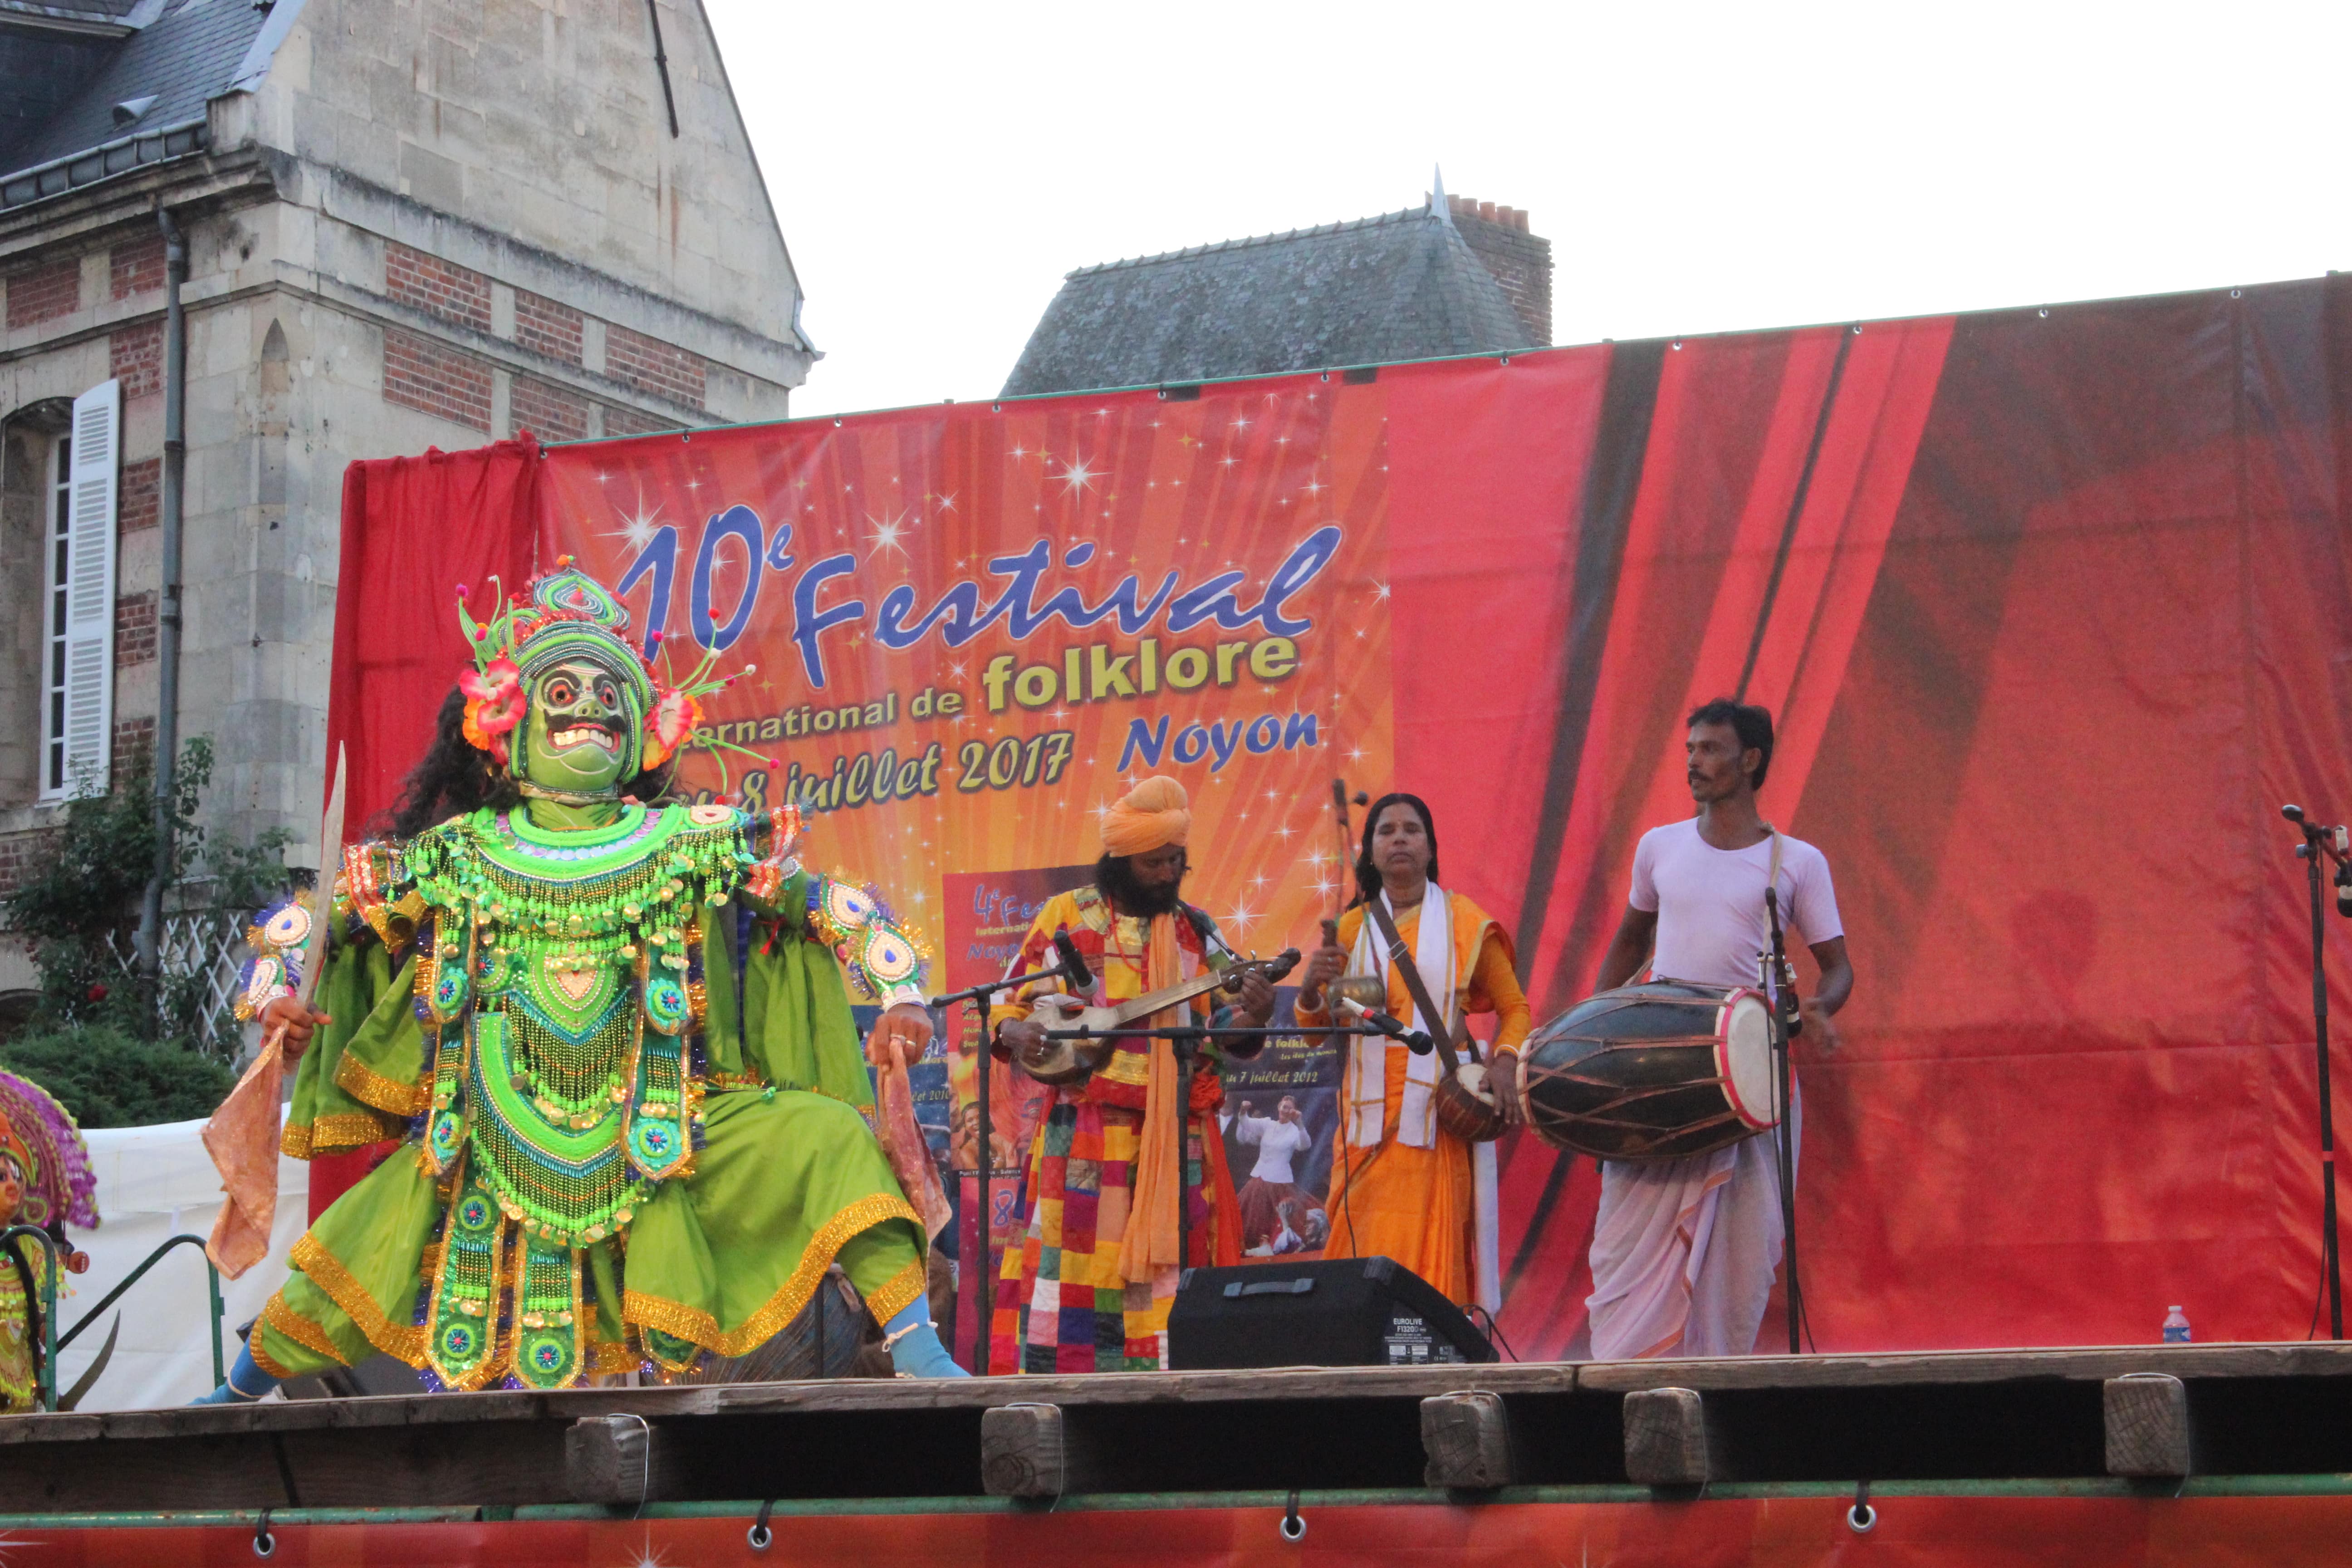 International Folklore Festival, France